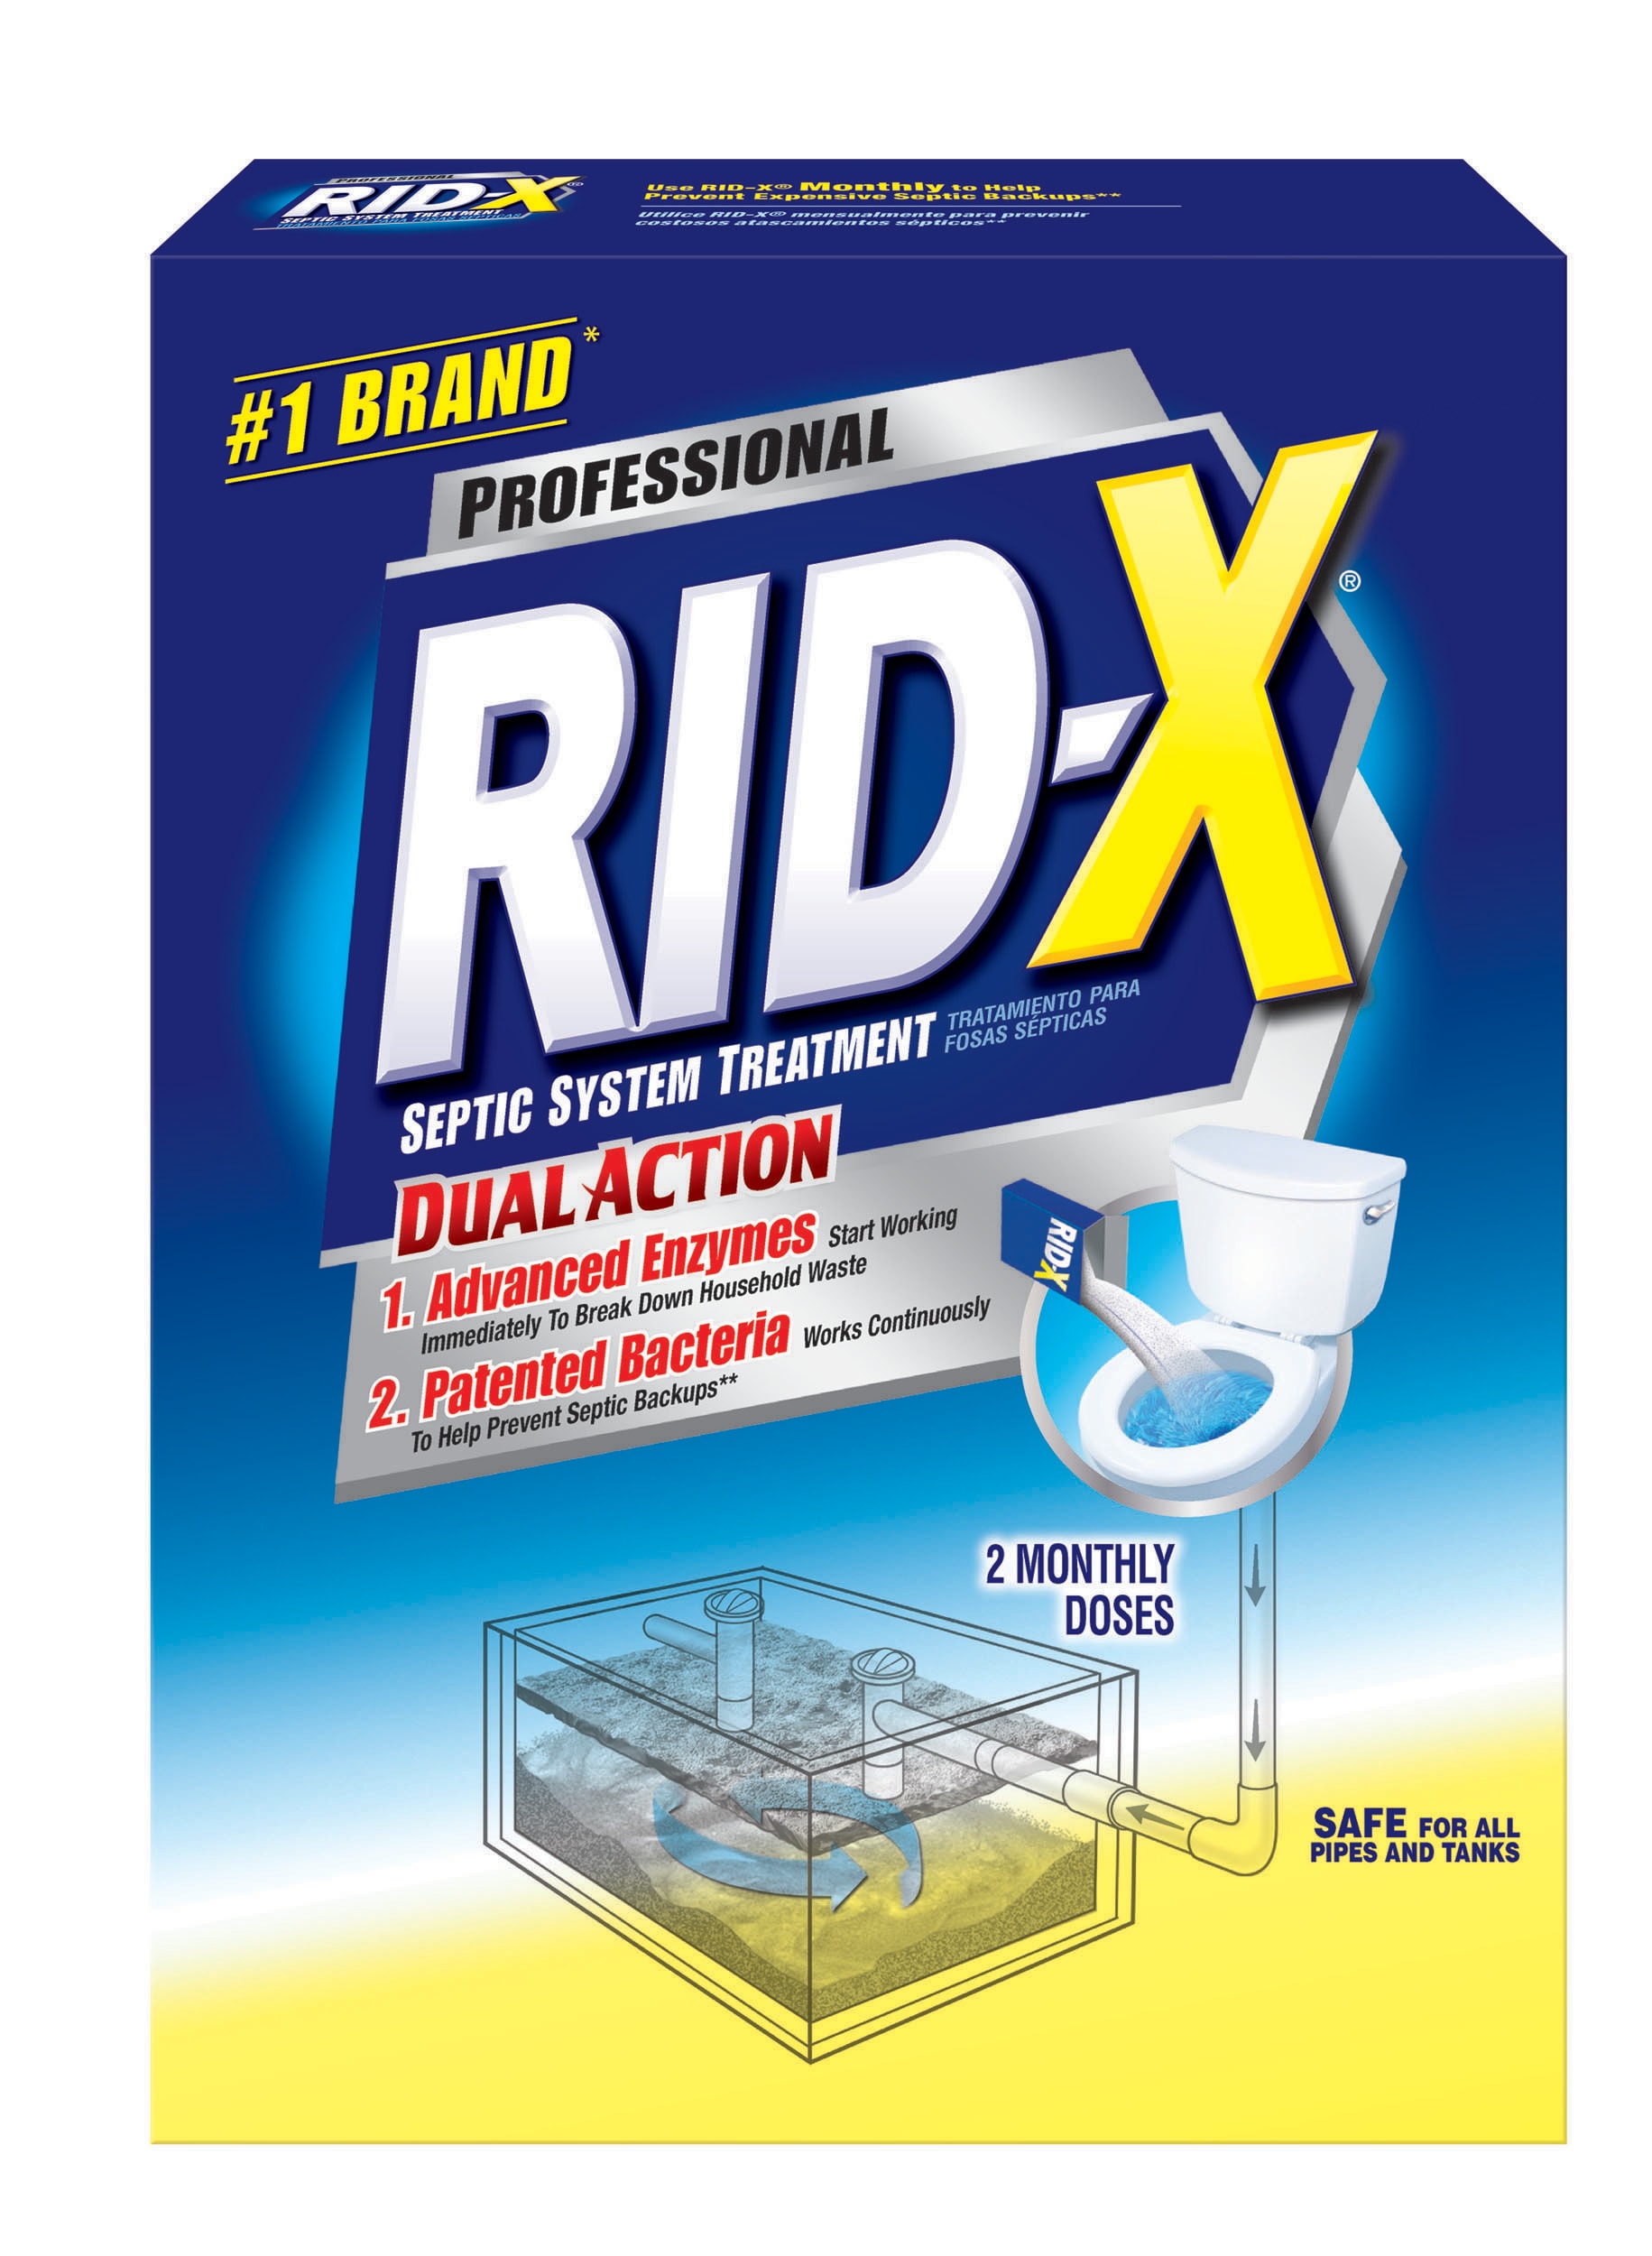 Rid-X Septic System Maintenance, Powder